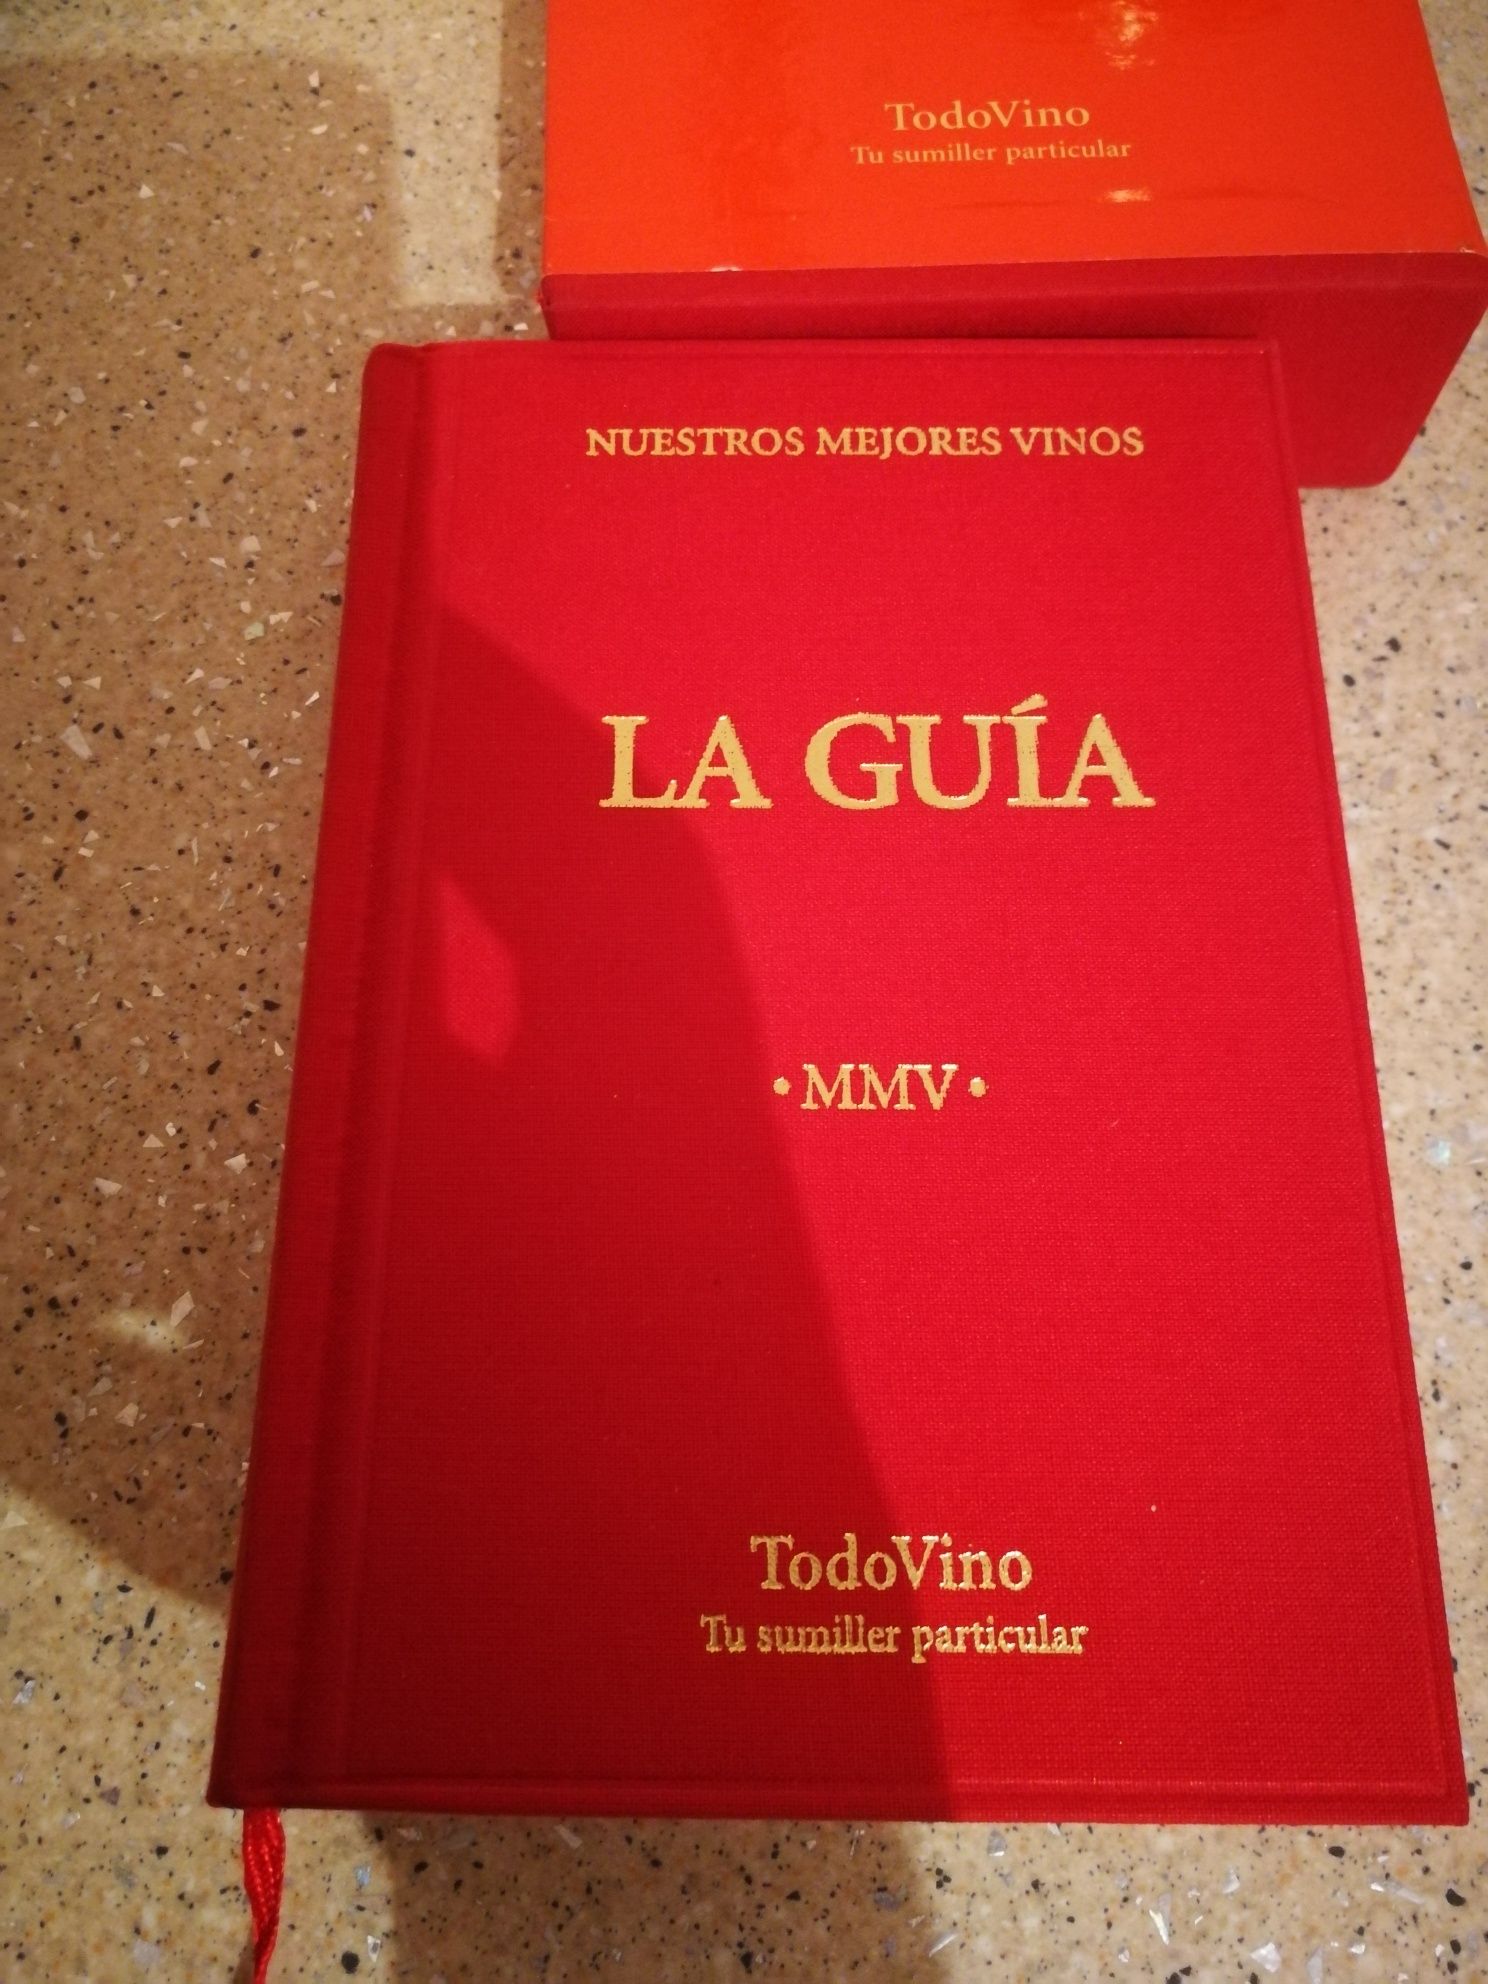 La guía - Guidul vinurilor, editie 2004 limba spaniola.